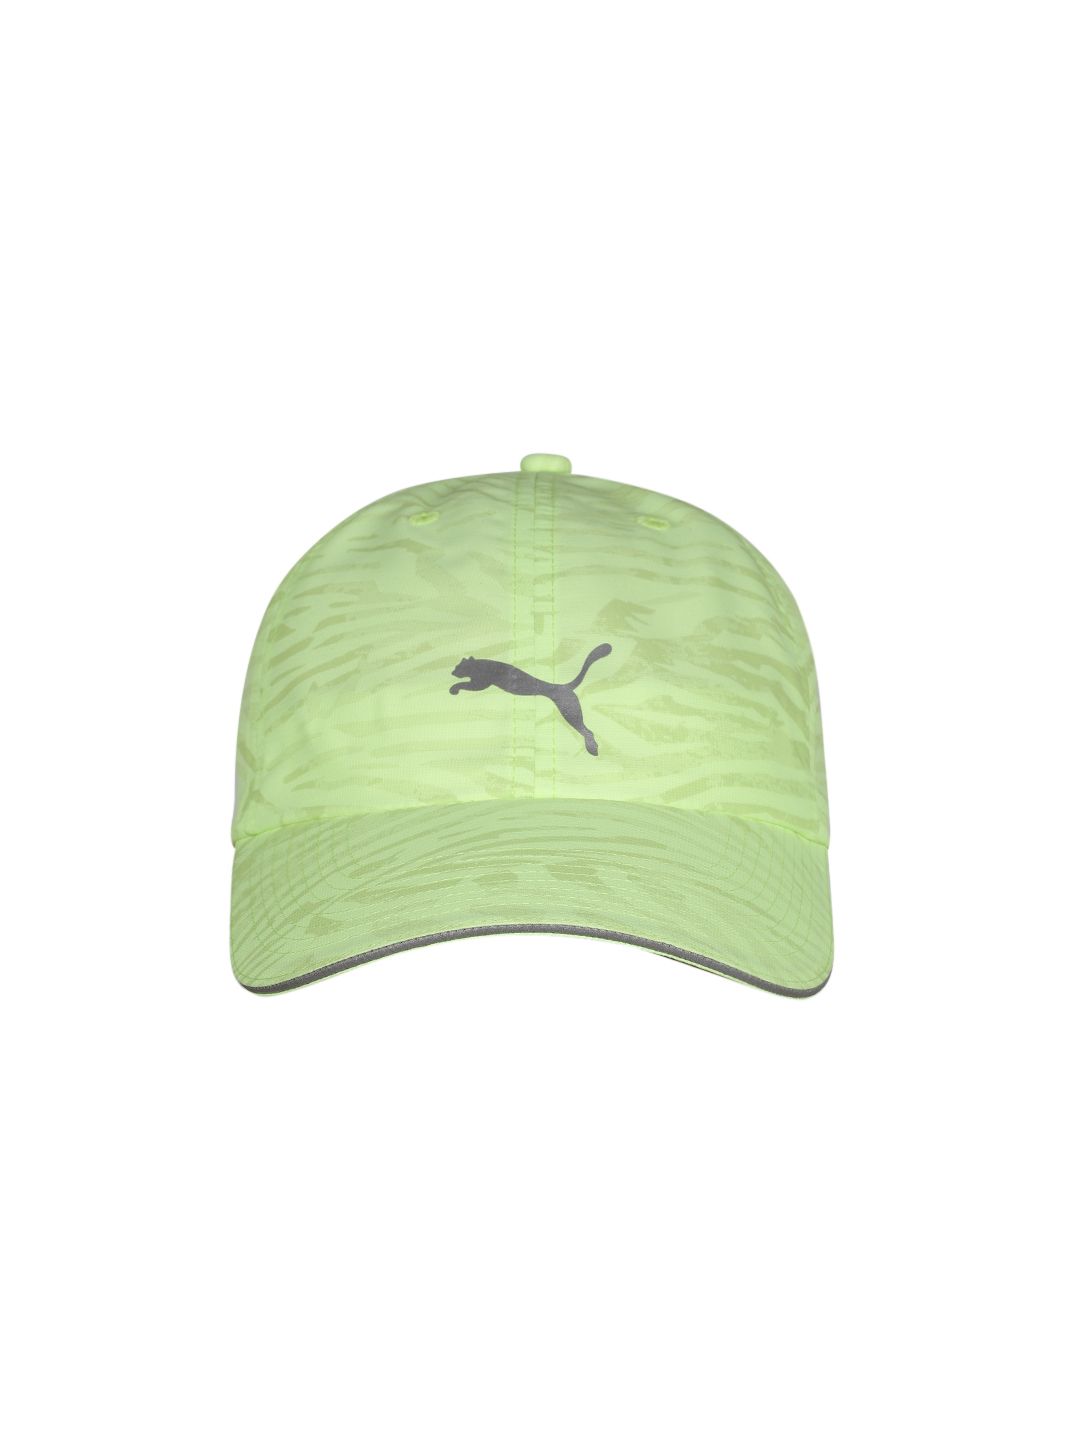 Puma Unisex Lime Green Printed Snapback Cap Price in India